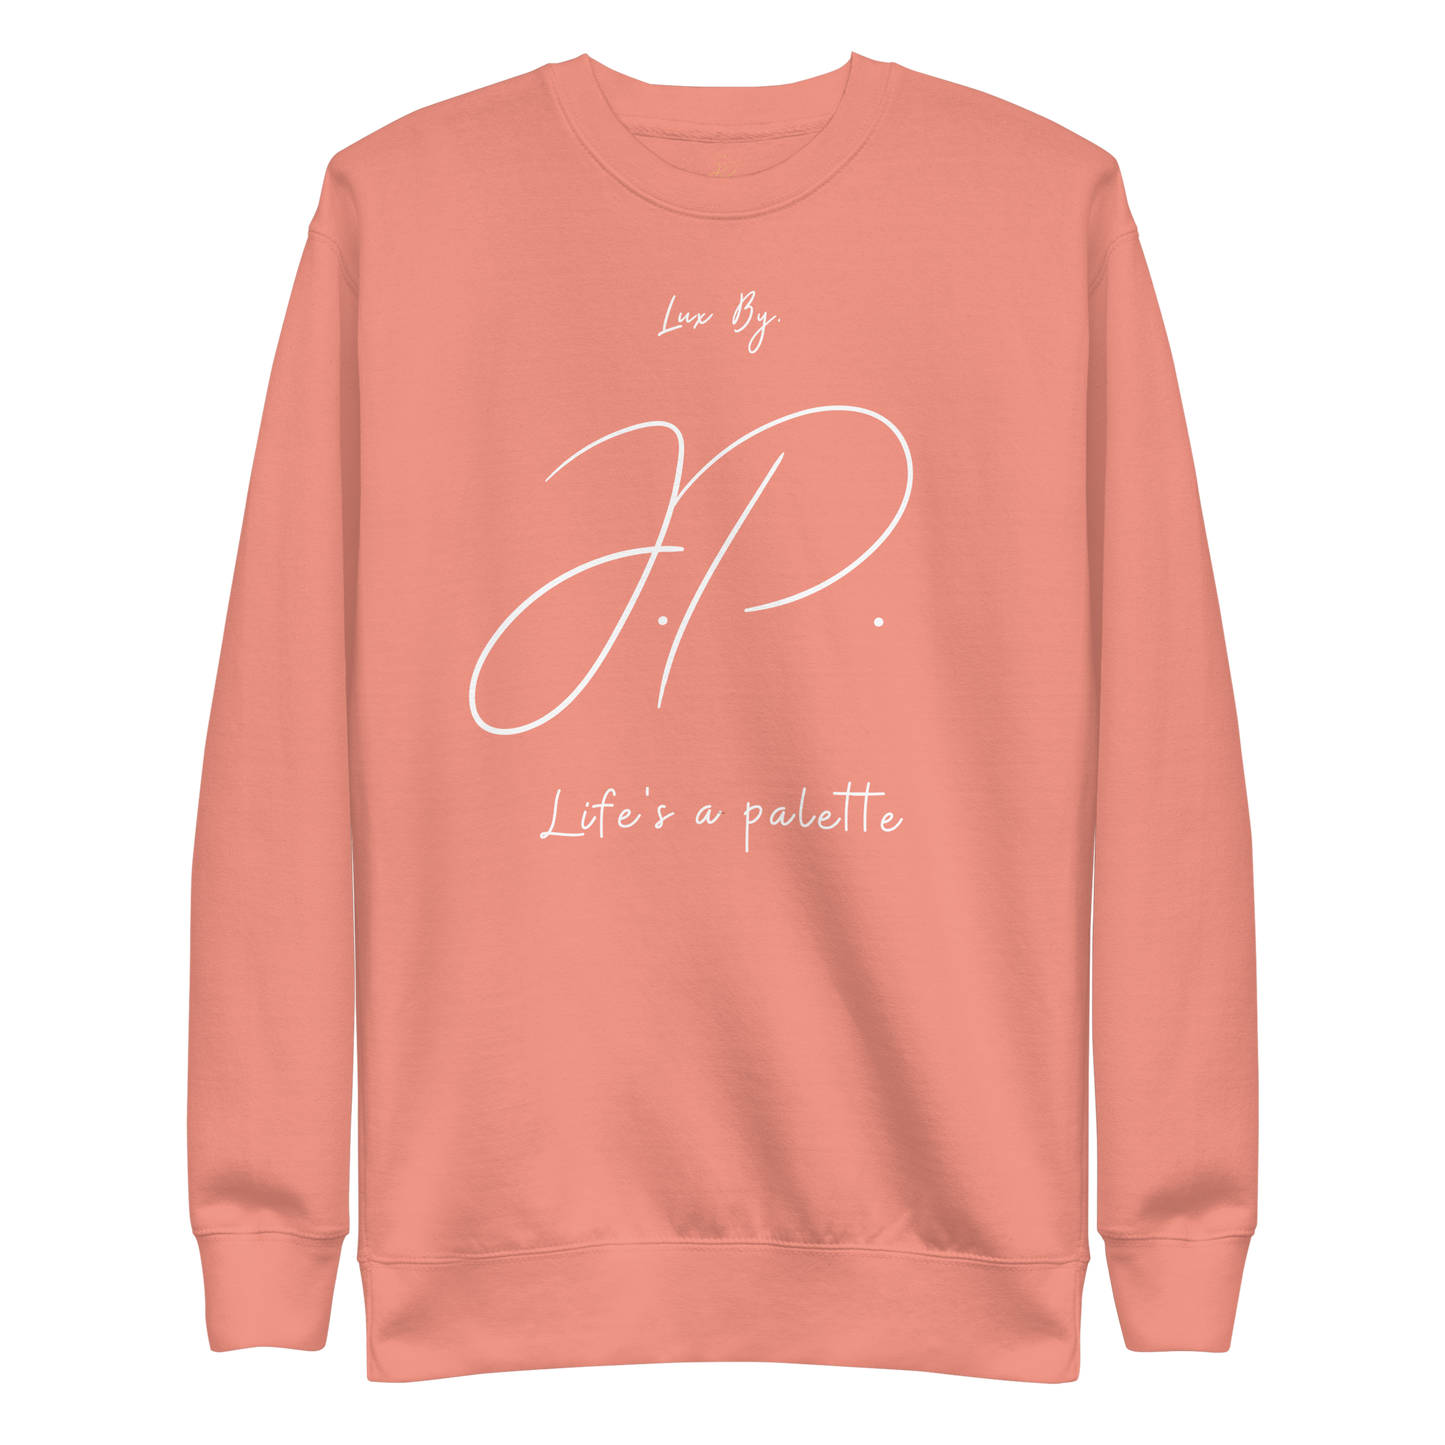 Lux. Sweatshirt - Dusty Rose - Life's a Palette edition